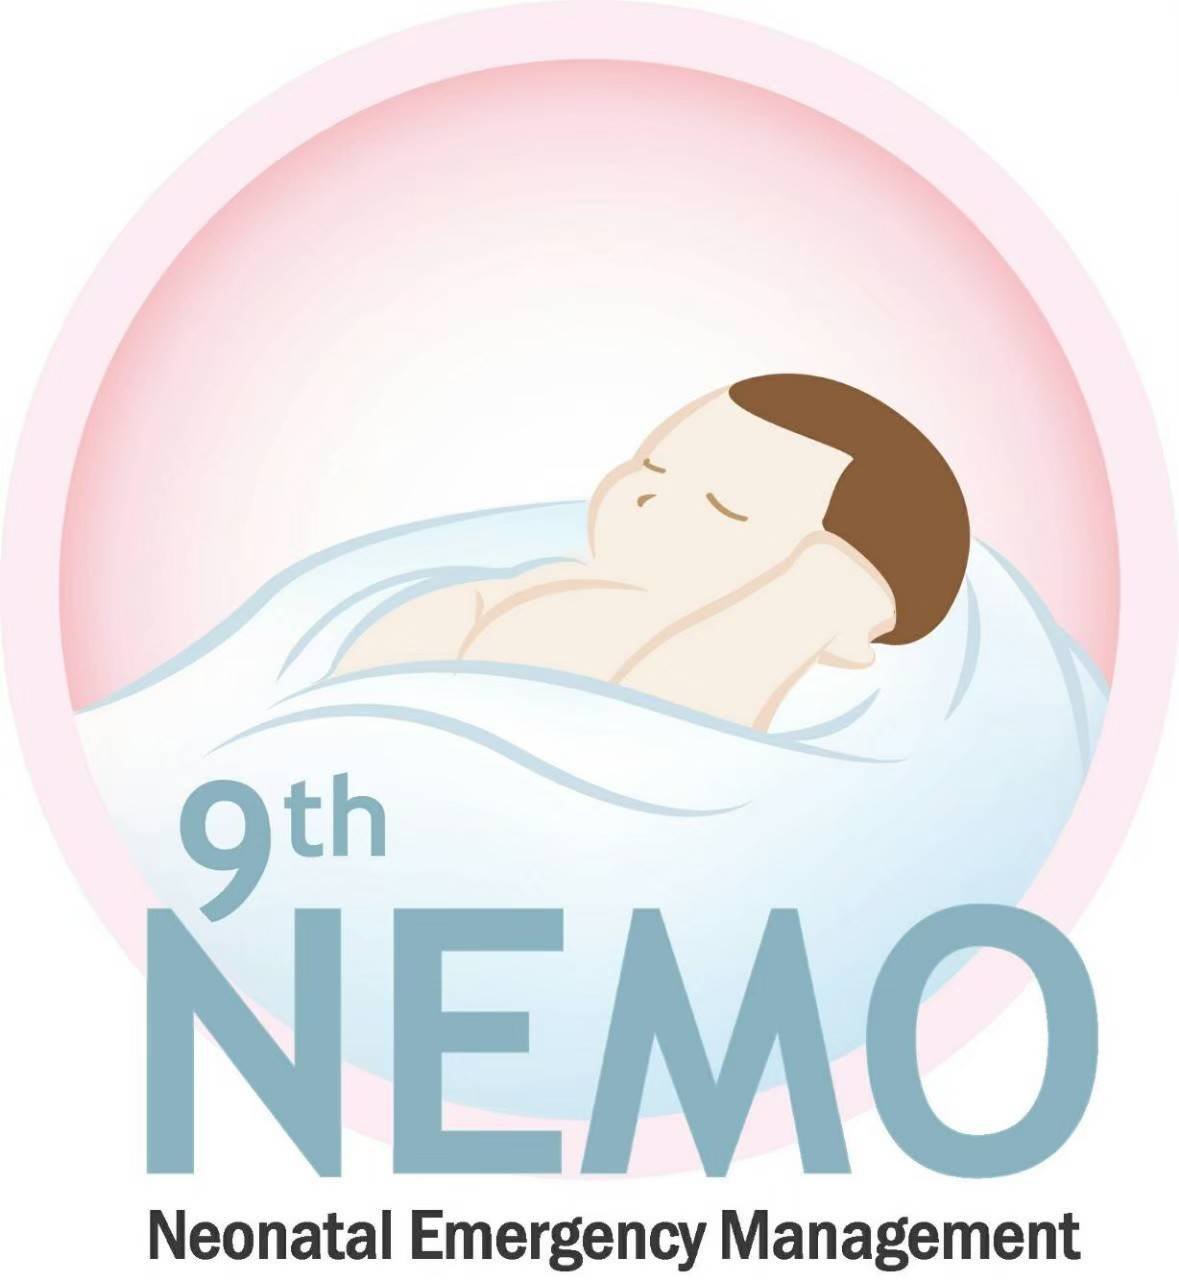 Neonatal Emergency Management